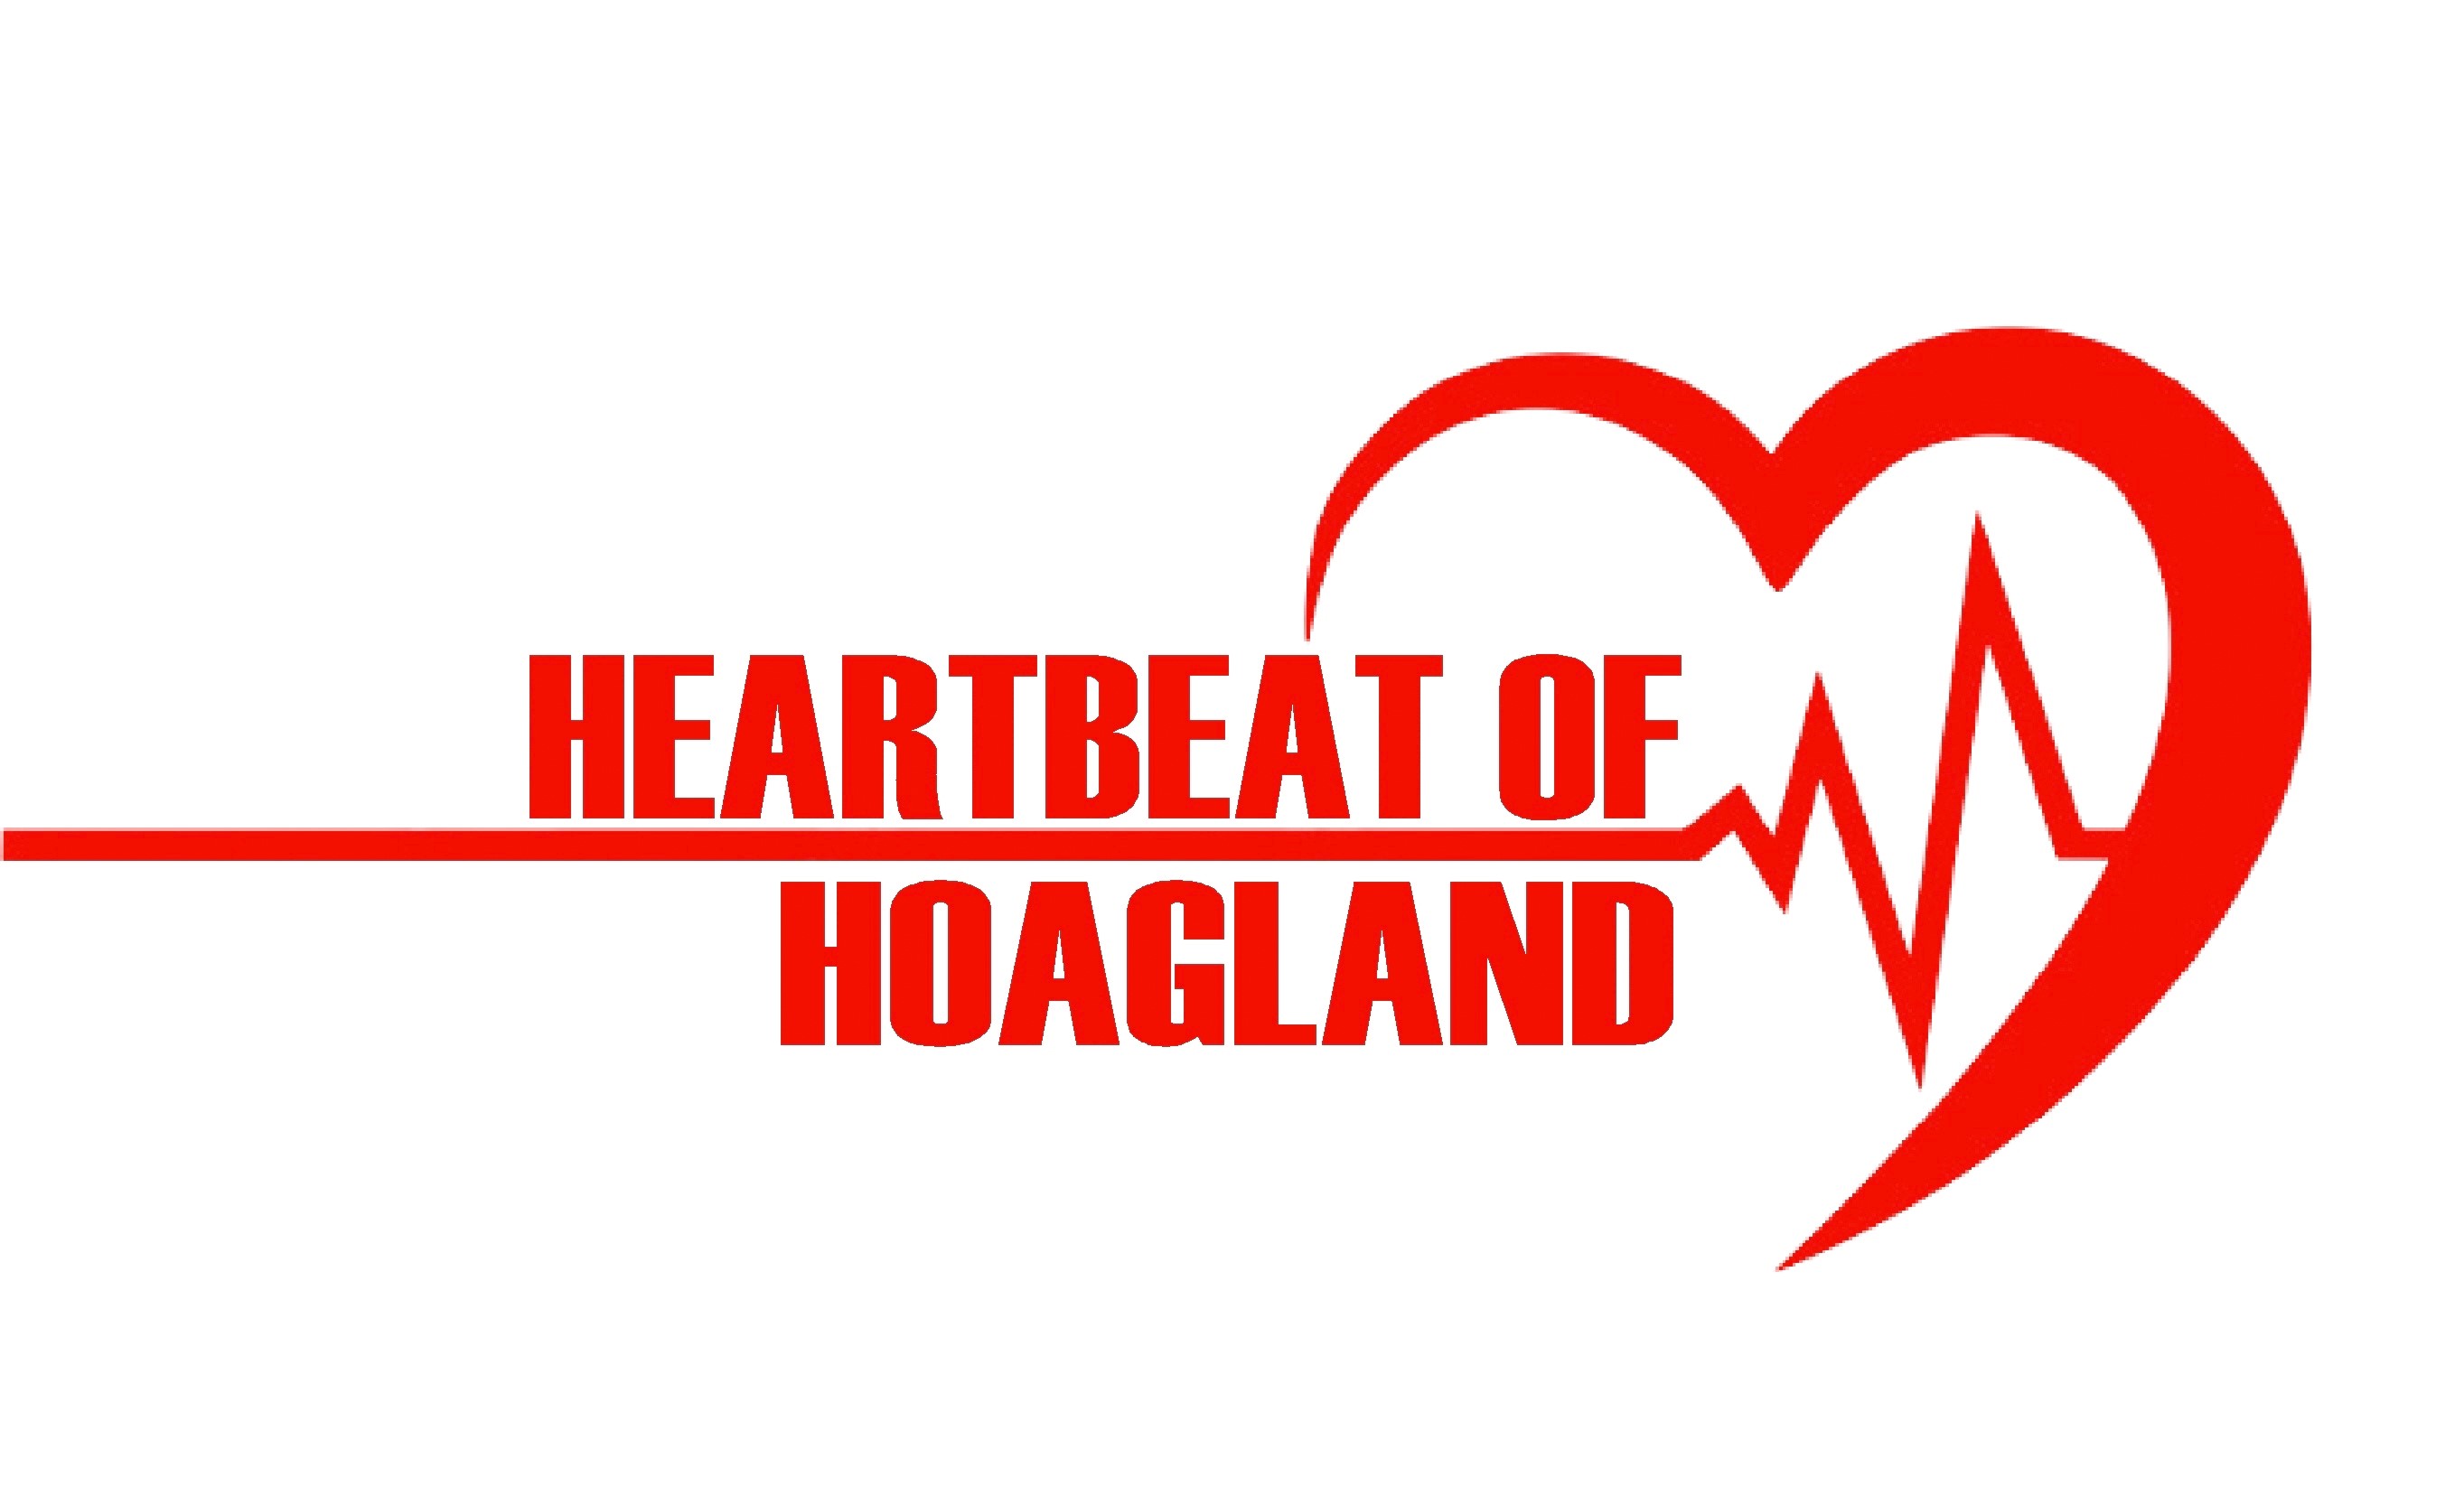 Heartbeat of Hoagland